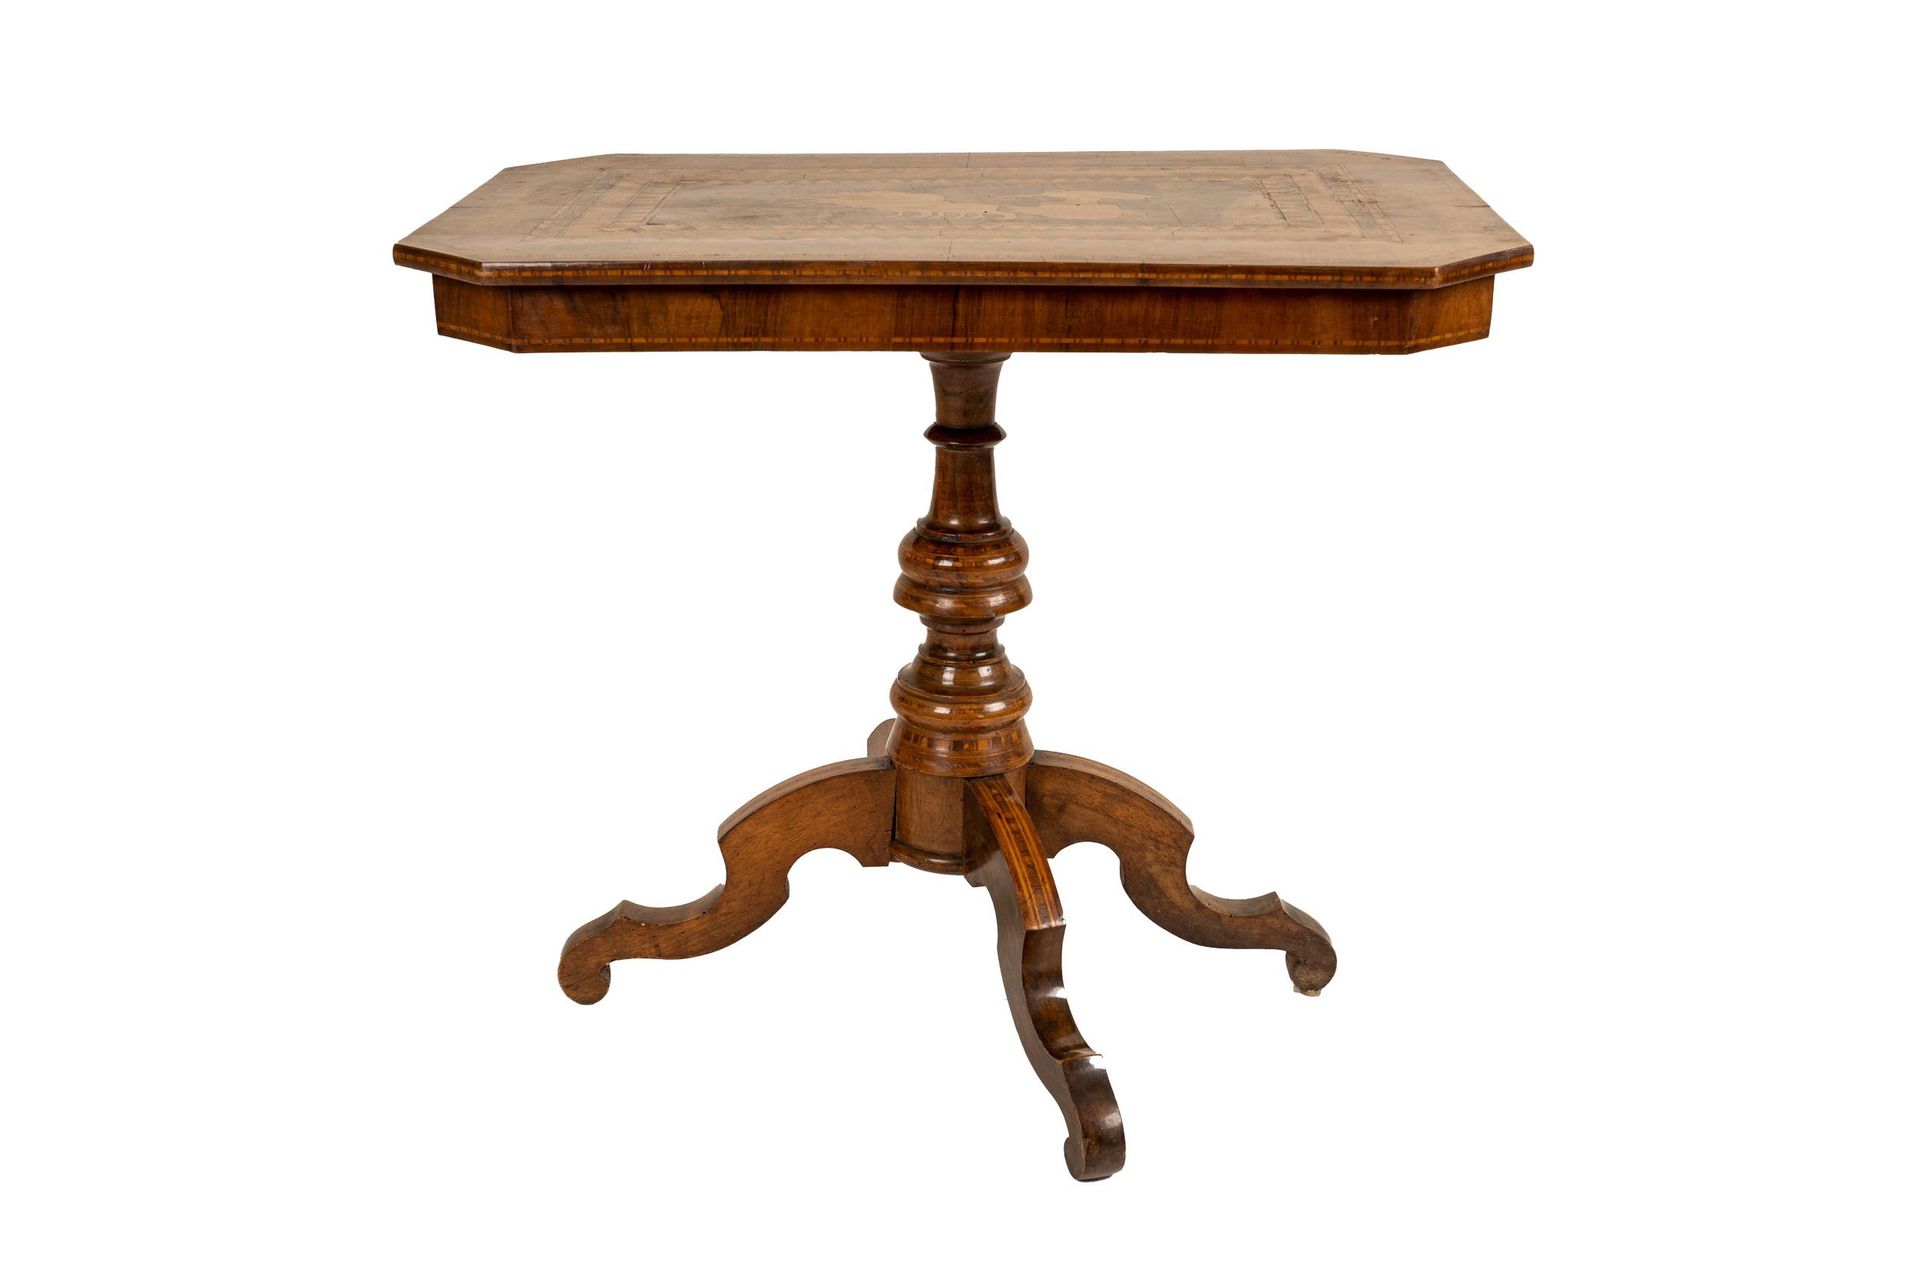 Null 中心桌


19世纪末的索伦托


胡桃木镶嵌着橄榄木和果木，长方形的顶部有缺口的角落，中心是一个奔跑的四角马，一个年轻人，可能是阿波罗，只在肩膀上穿&hellip;